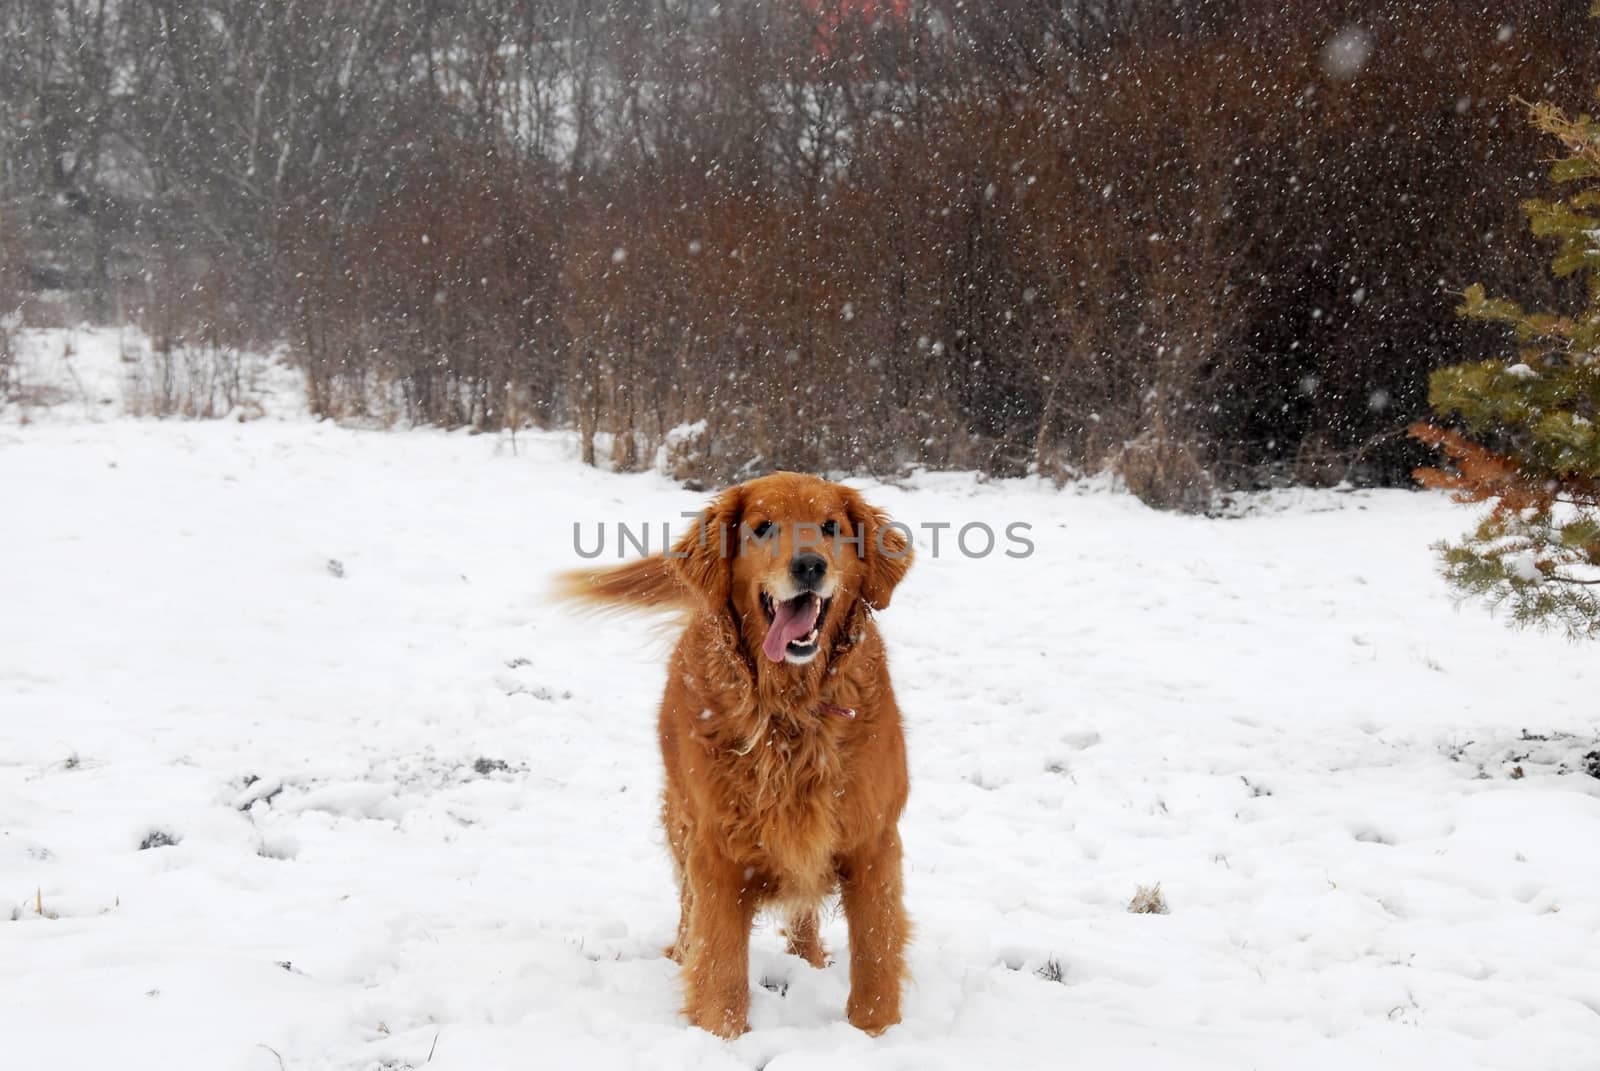 Golden retriever at snowfall by simply